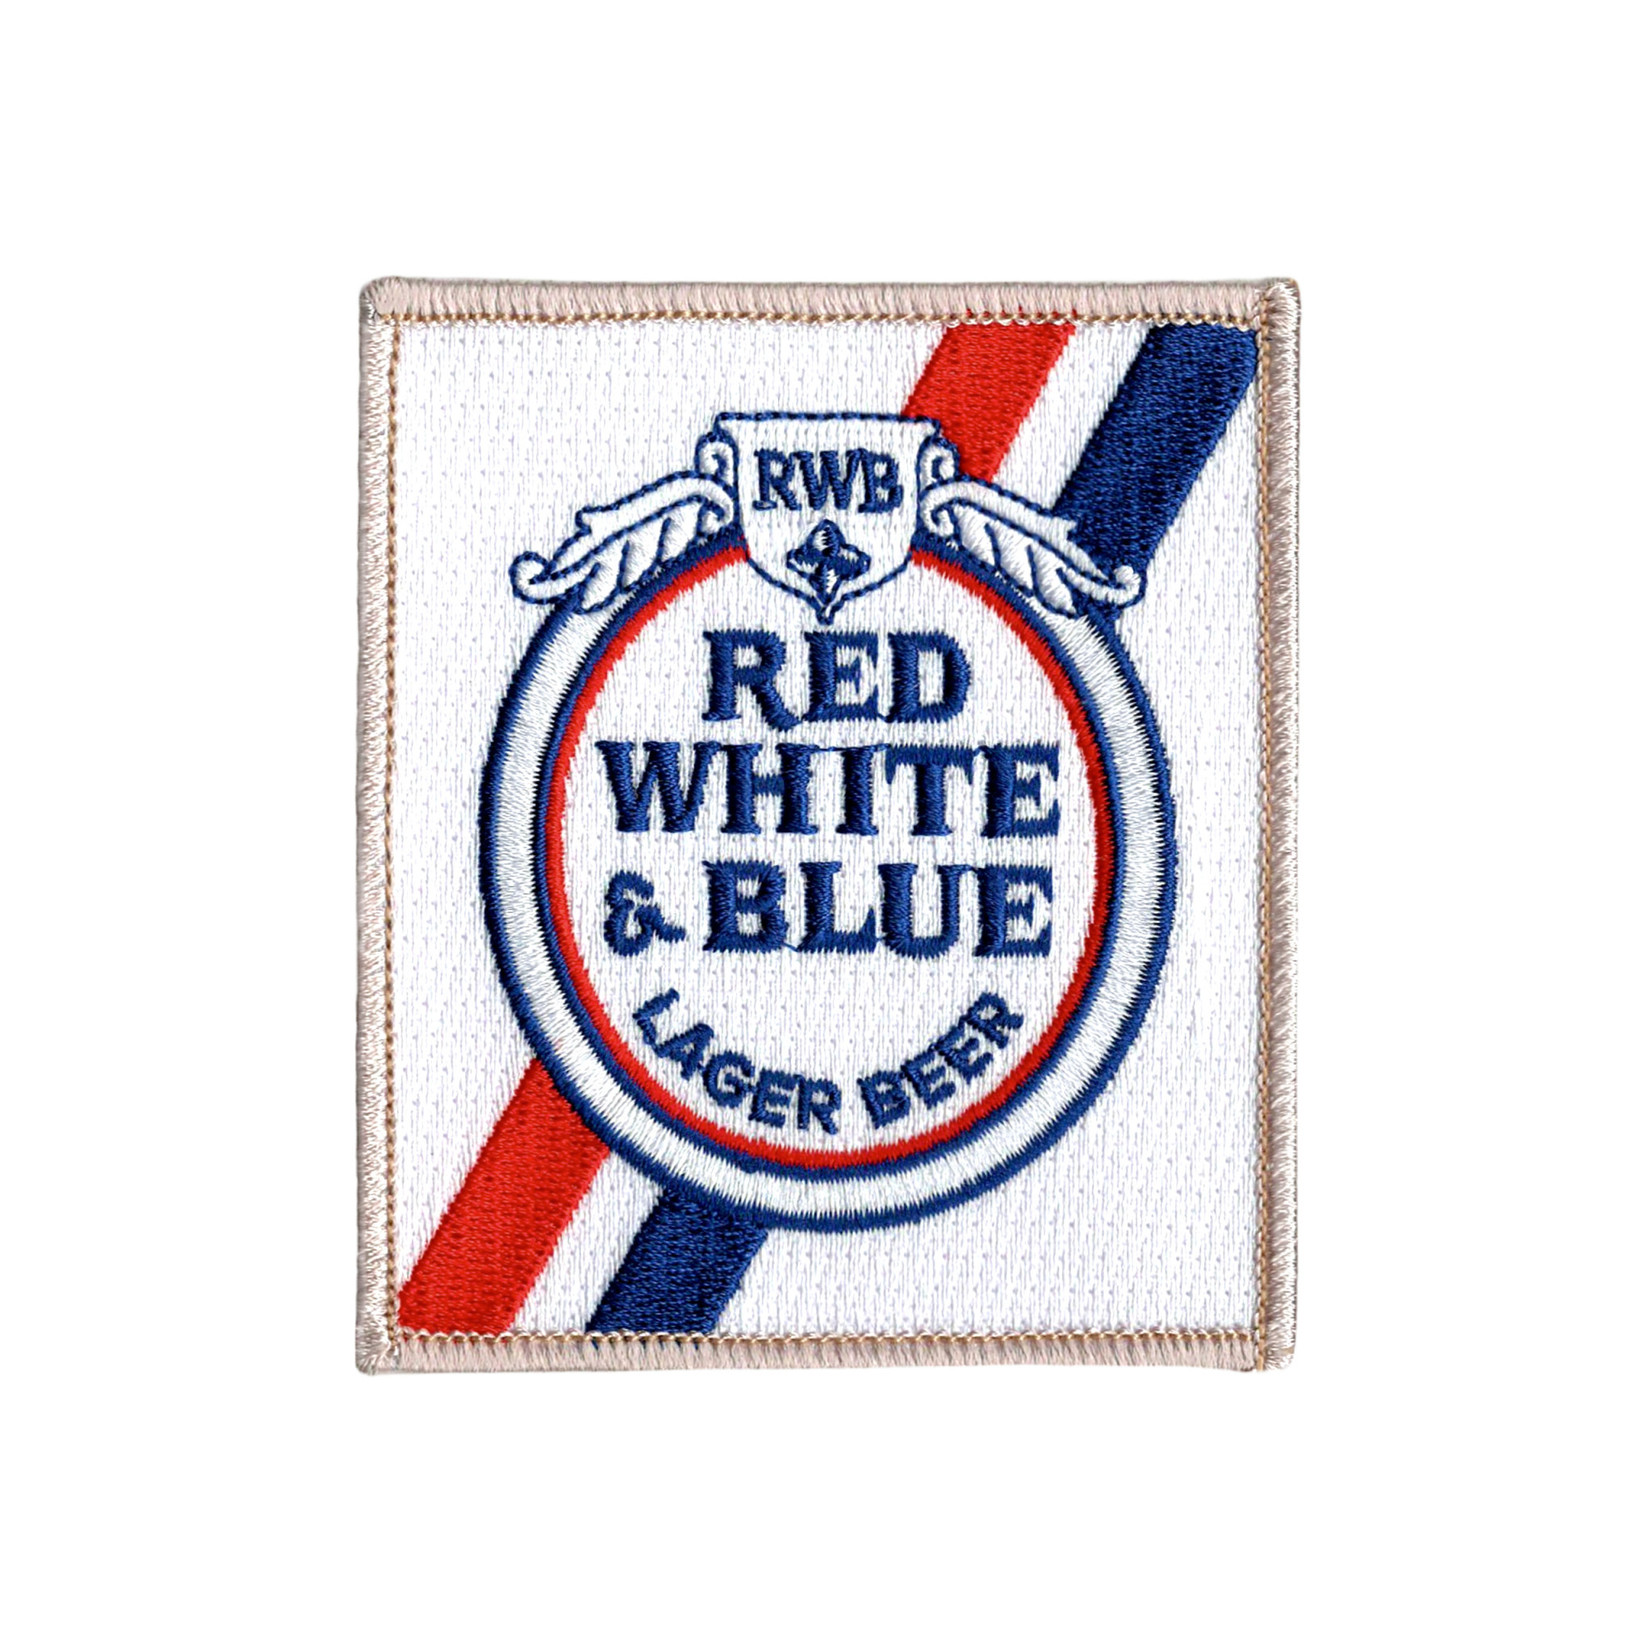 RWB Red White & Blue Patch